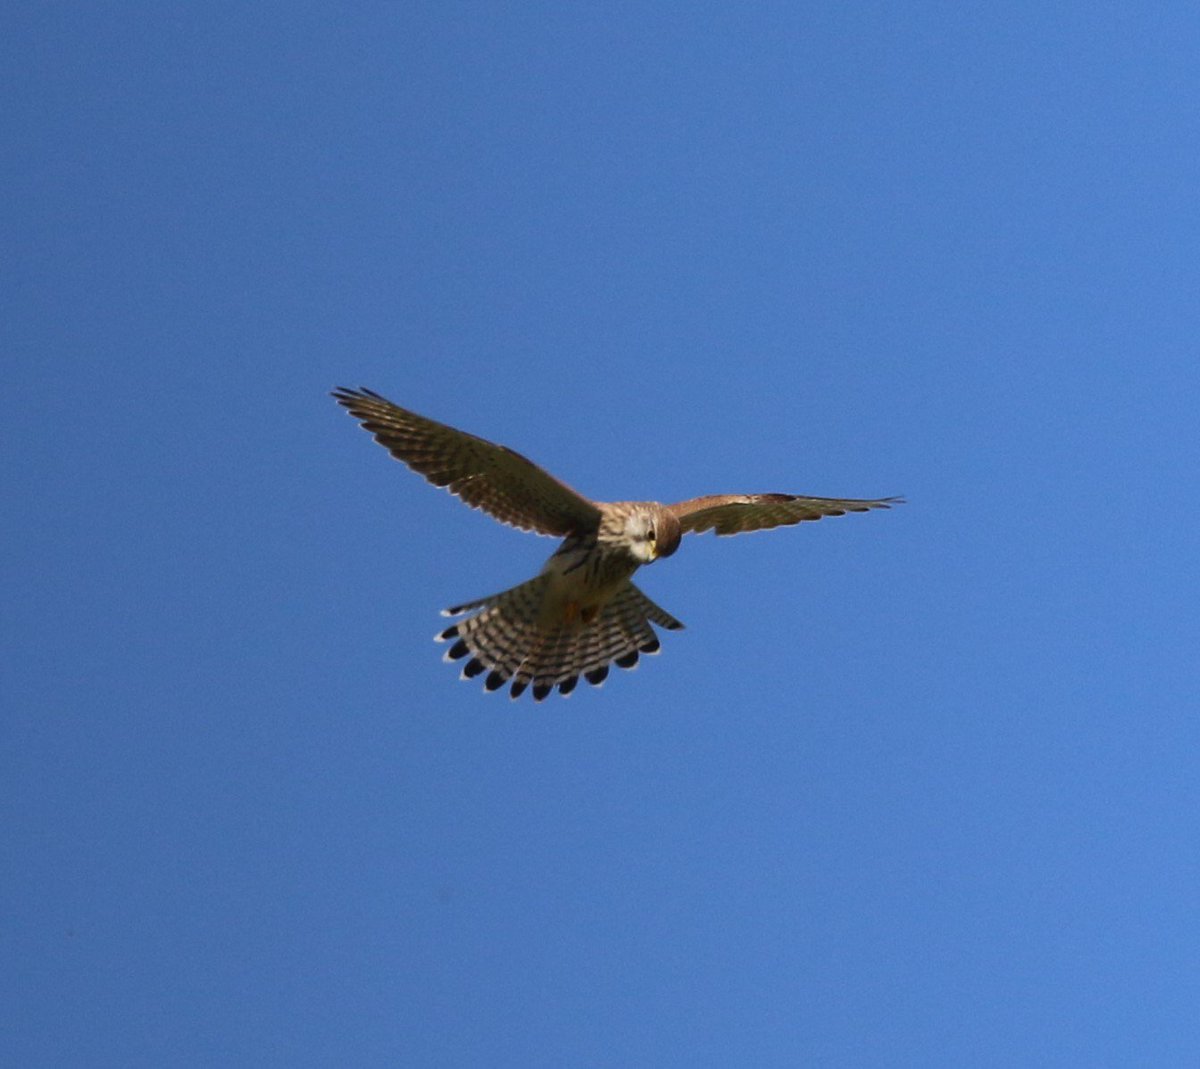 RT @LizWalk1: Beautiful bird on a beautiful day #kestrel over #Steyning bowl. @FeathersBirding @wildlife_uk @worthingbirding @birdsofprey_uk @wildlife_birds @WildlifeInTheUK @BBCSpringwatch @SussexWildlife @Britnatureguide